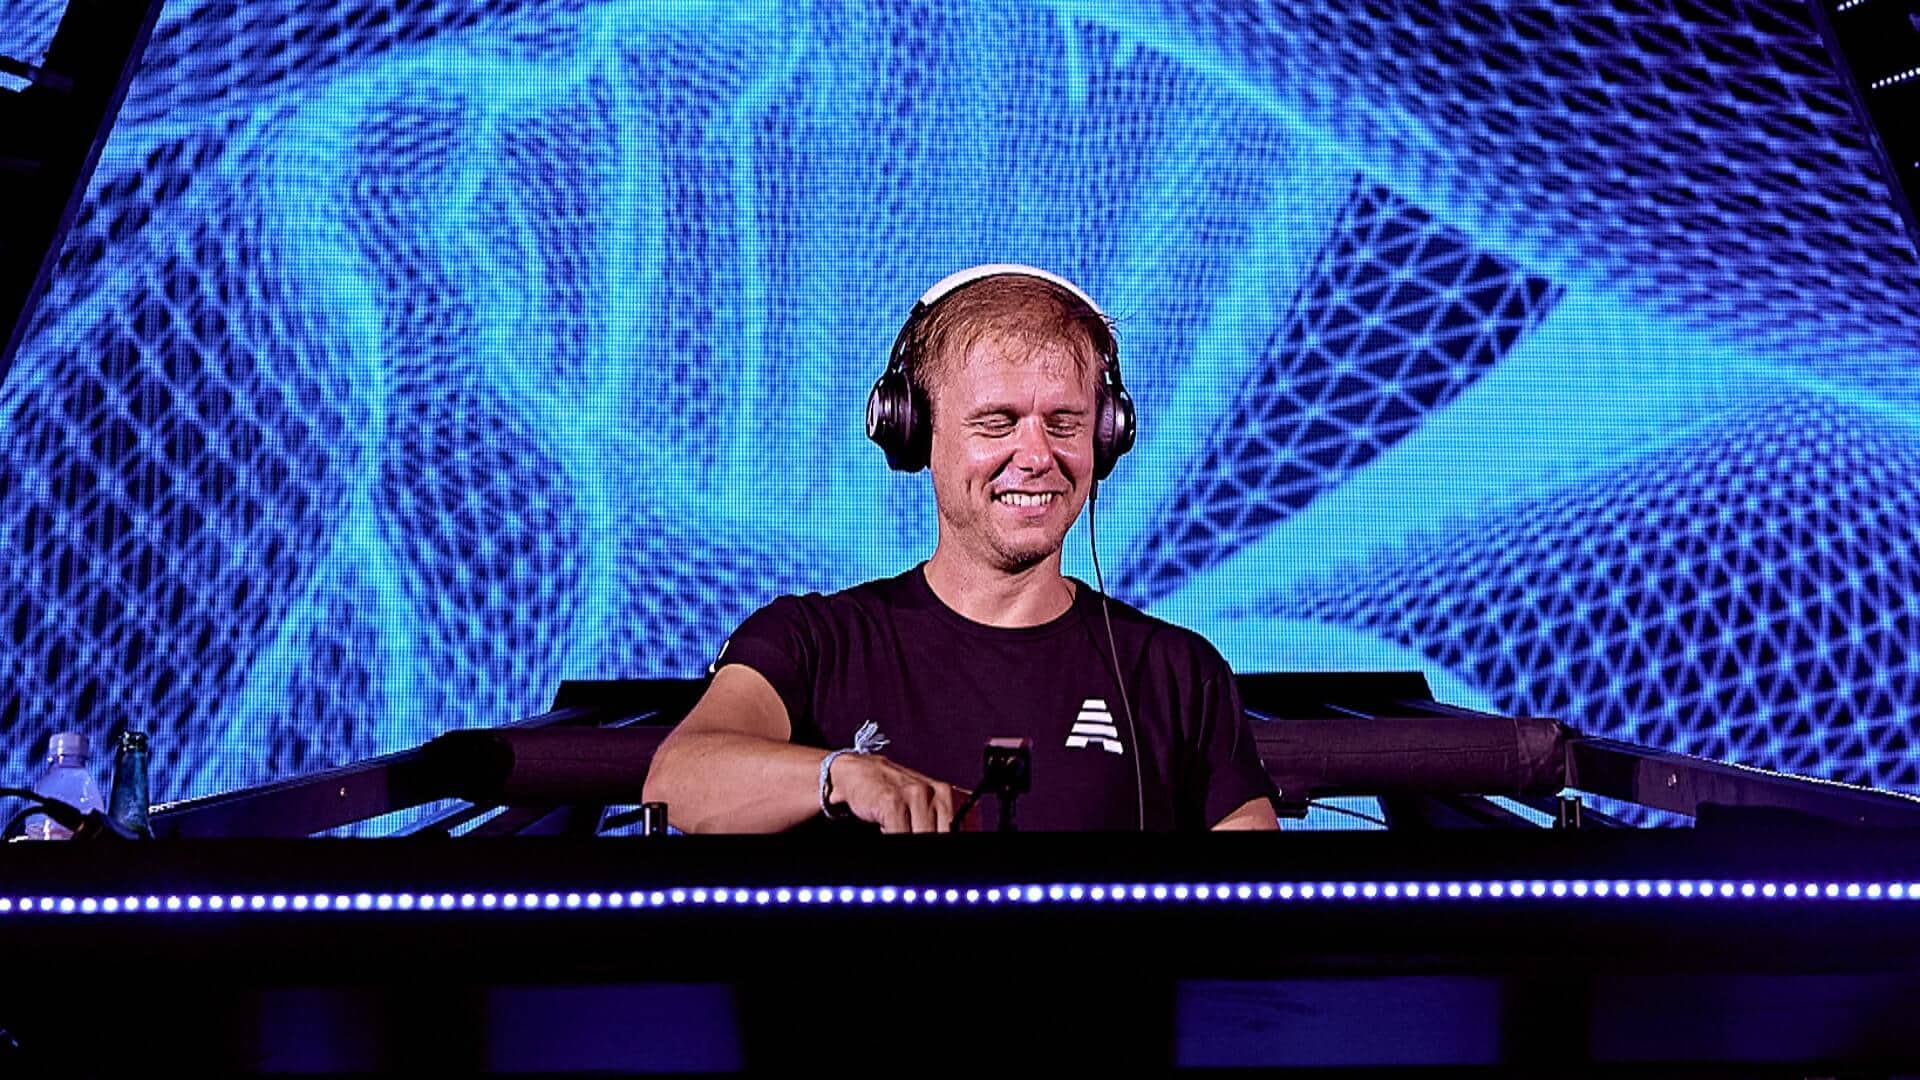 Armin van Buuren teaches how to organize music projects